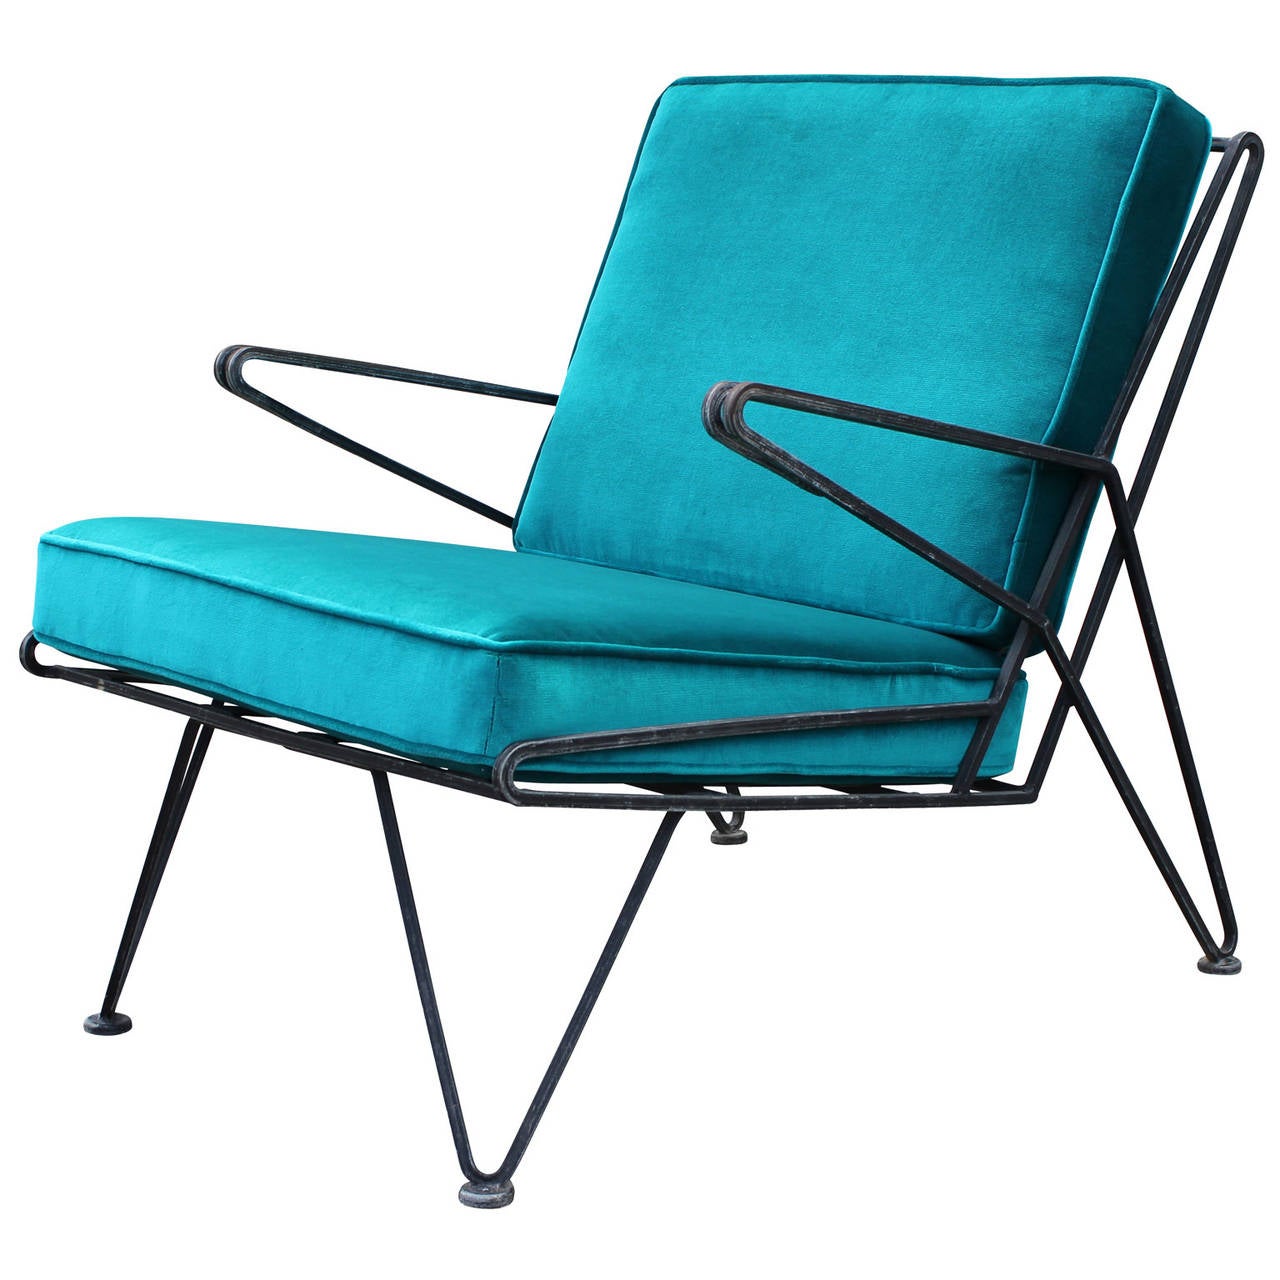 Mid-20th Century Phenomenal Pair of Teal Velvet Italian Style Mid-Century Modern Lounge Chairs